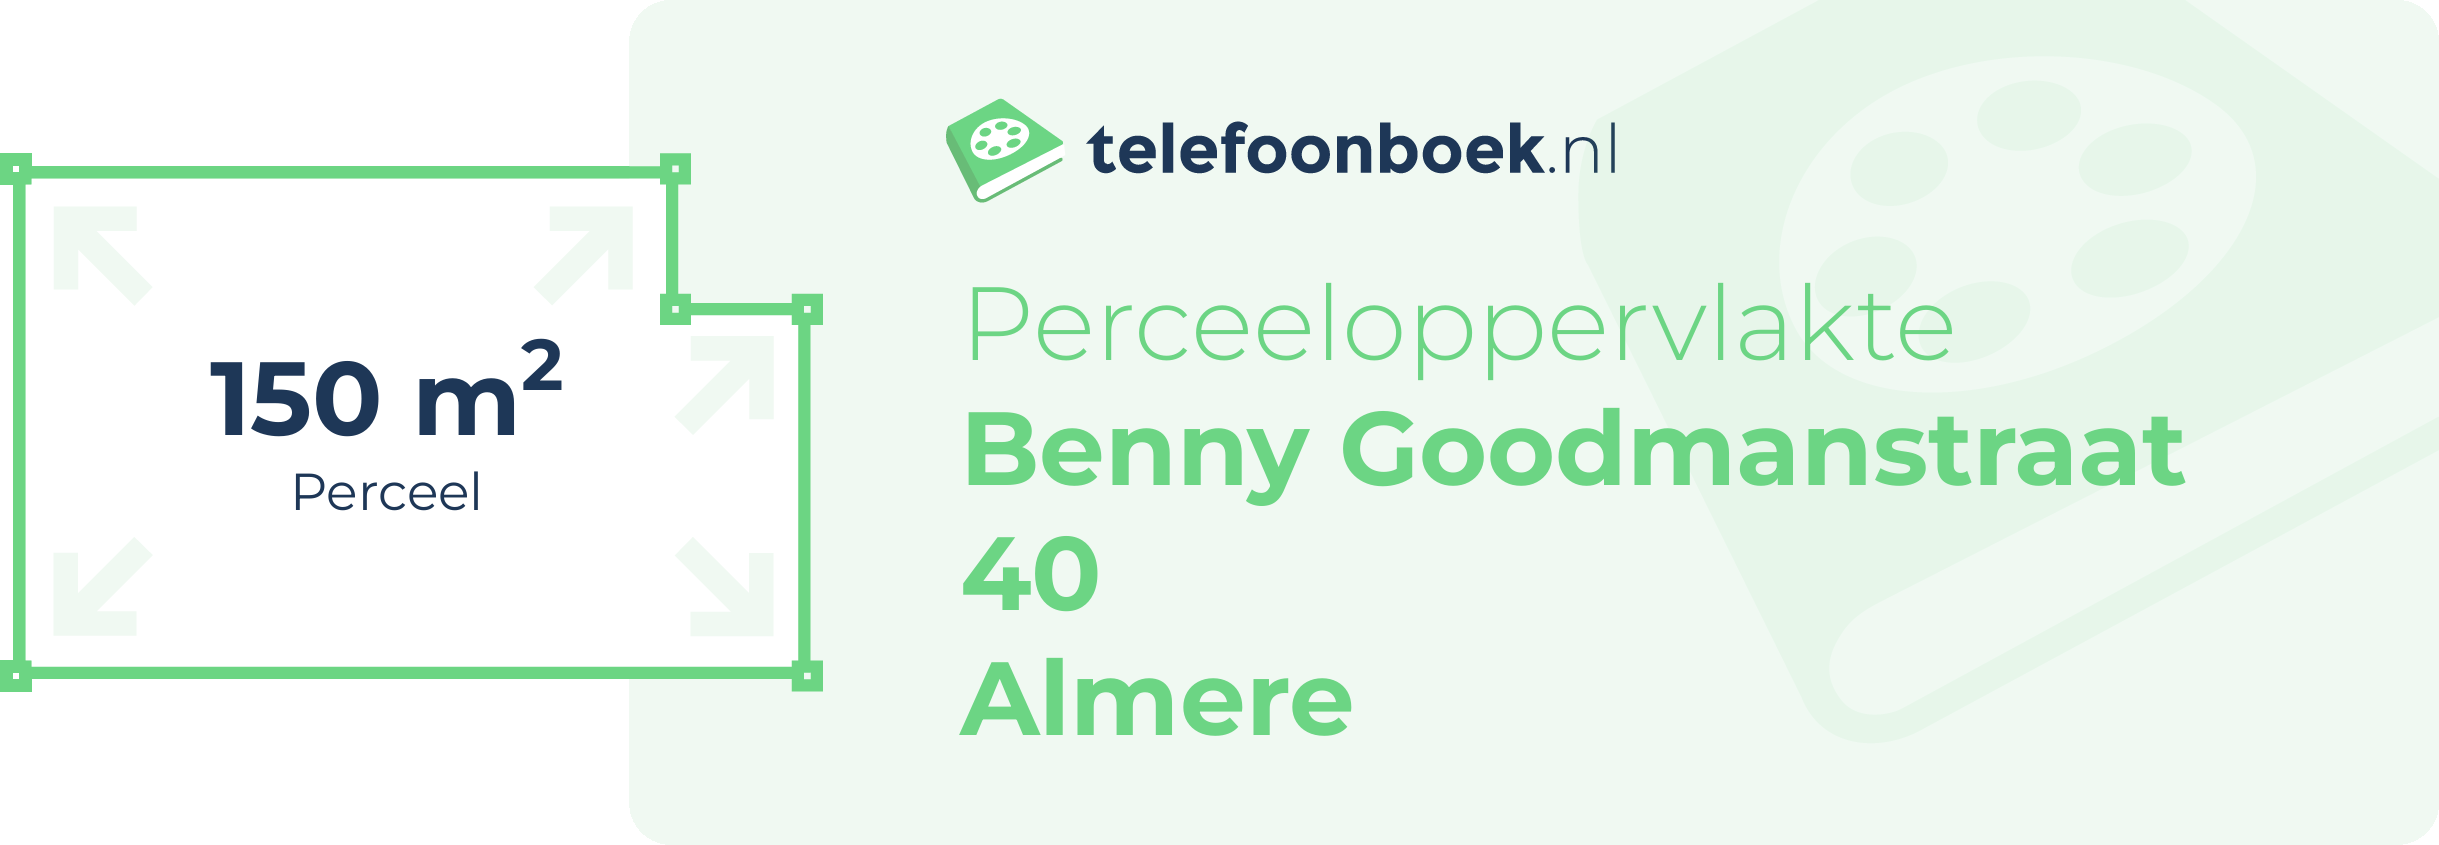 Perceeloppervlakte Benny Goodmanstraat 40 Almere